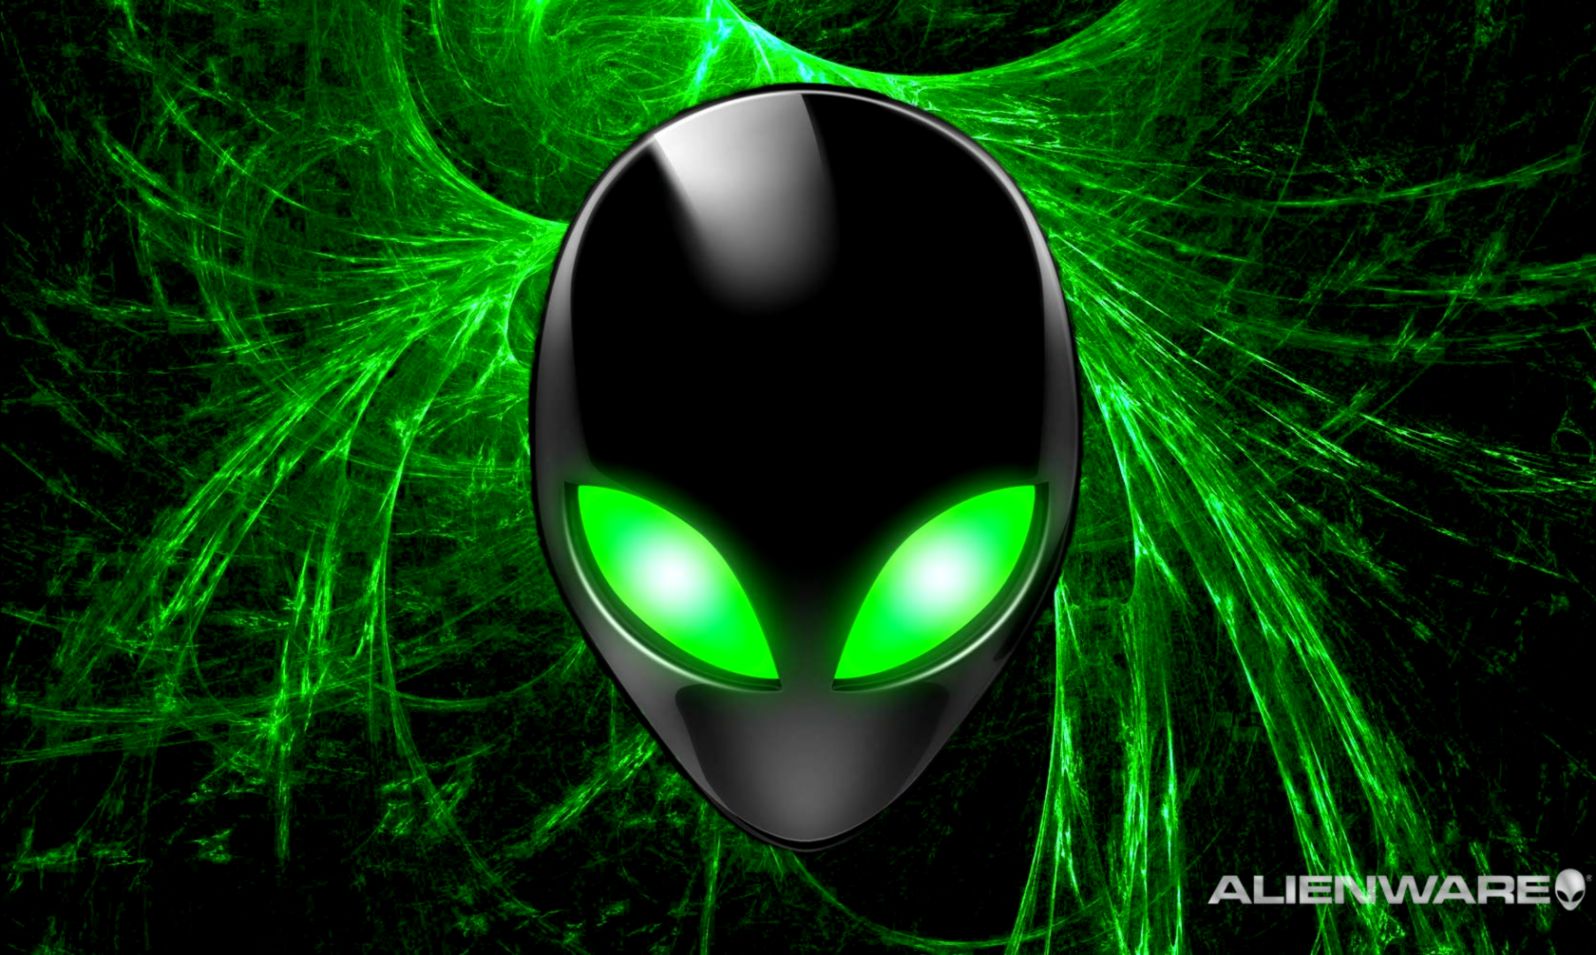 Download Alienware Green Wallpaper Wallpaper Full HD Wallpapers